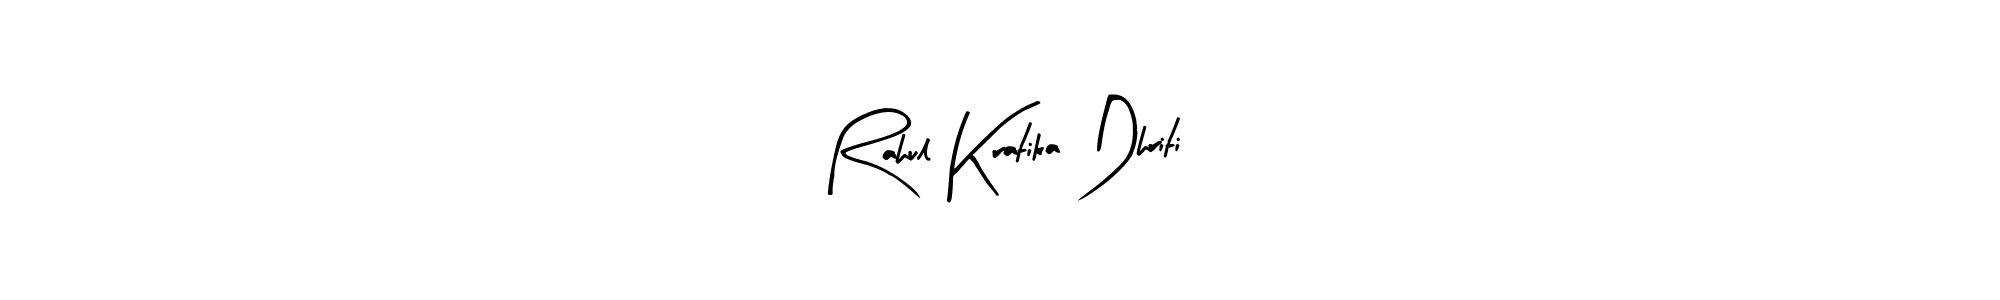 How to Draw Rahul Kratika Dhriti signature style? Arty Signature is a latest design signature styles for name Rahul Kratika Dhriti. Rahul Kratika Dhriti signature style 8 images and pictures png